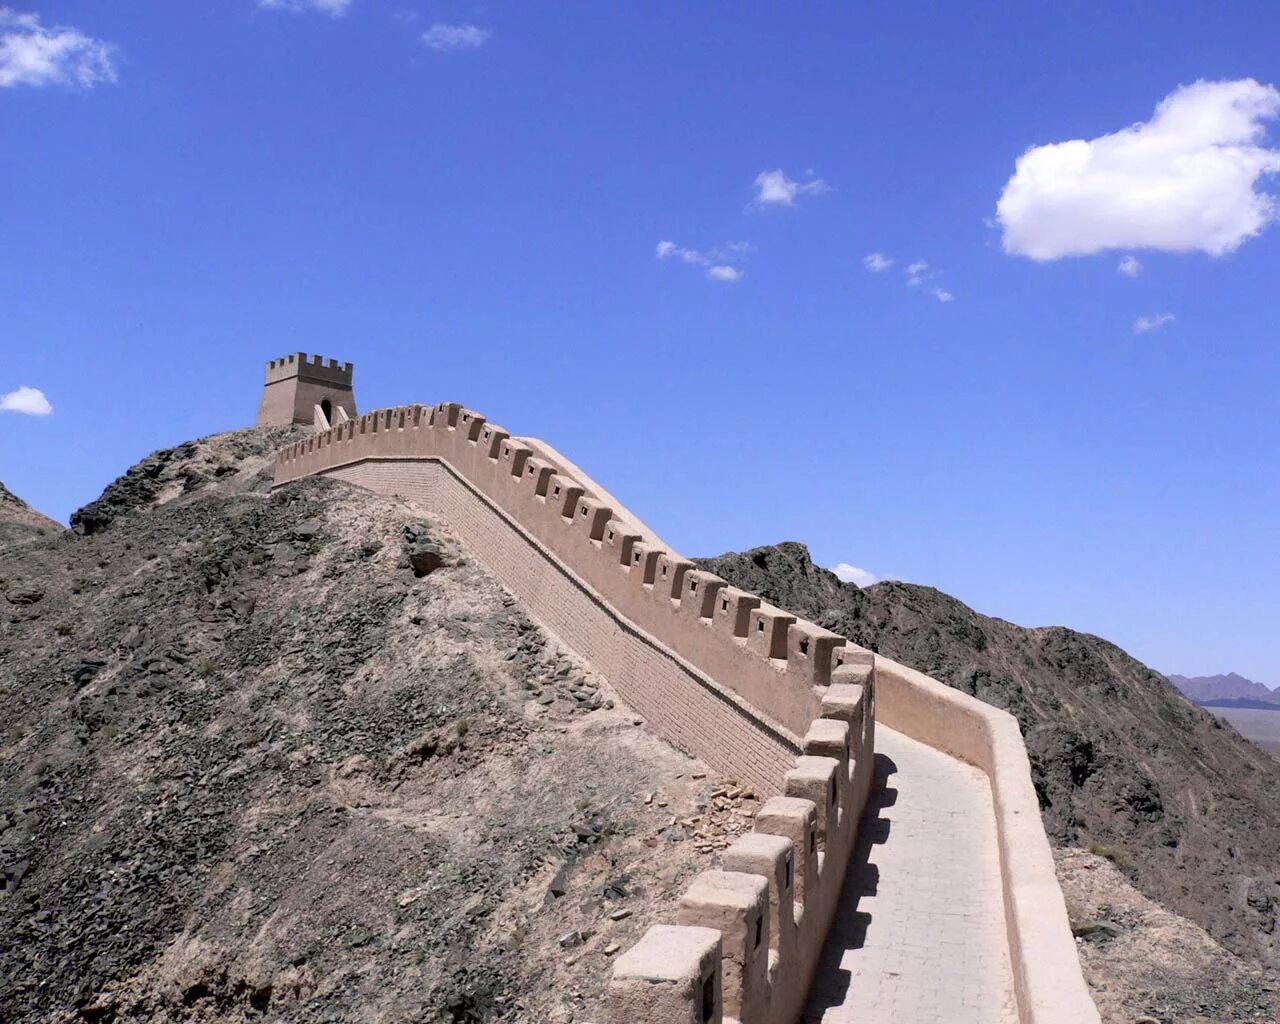 Края китайской стены. Великая китайская стена начало и конец. Конец китайской стены. Шаньхайгуань китайская стена. Край китайской стены.